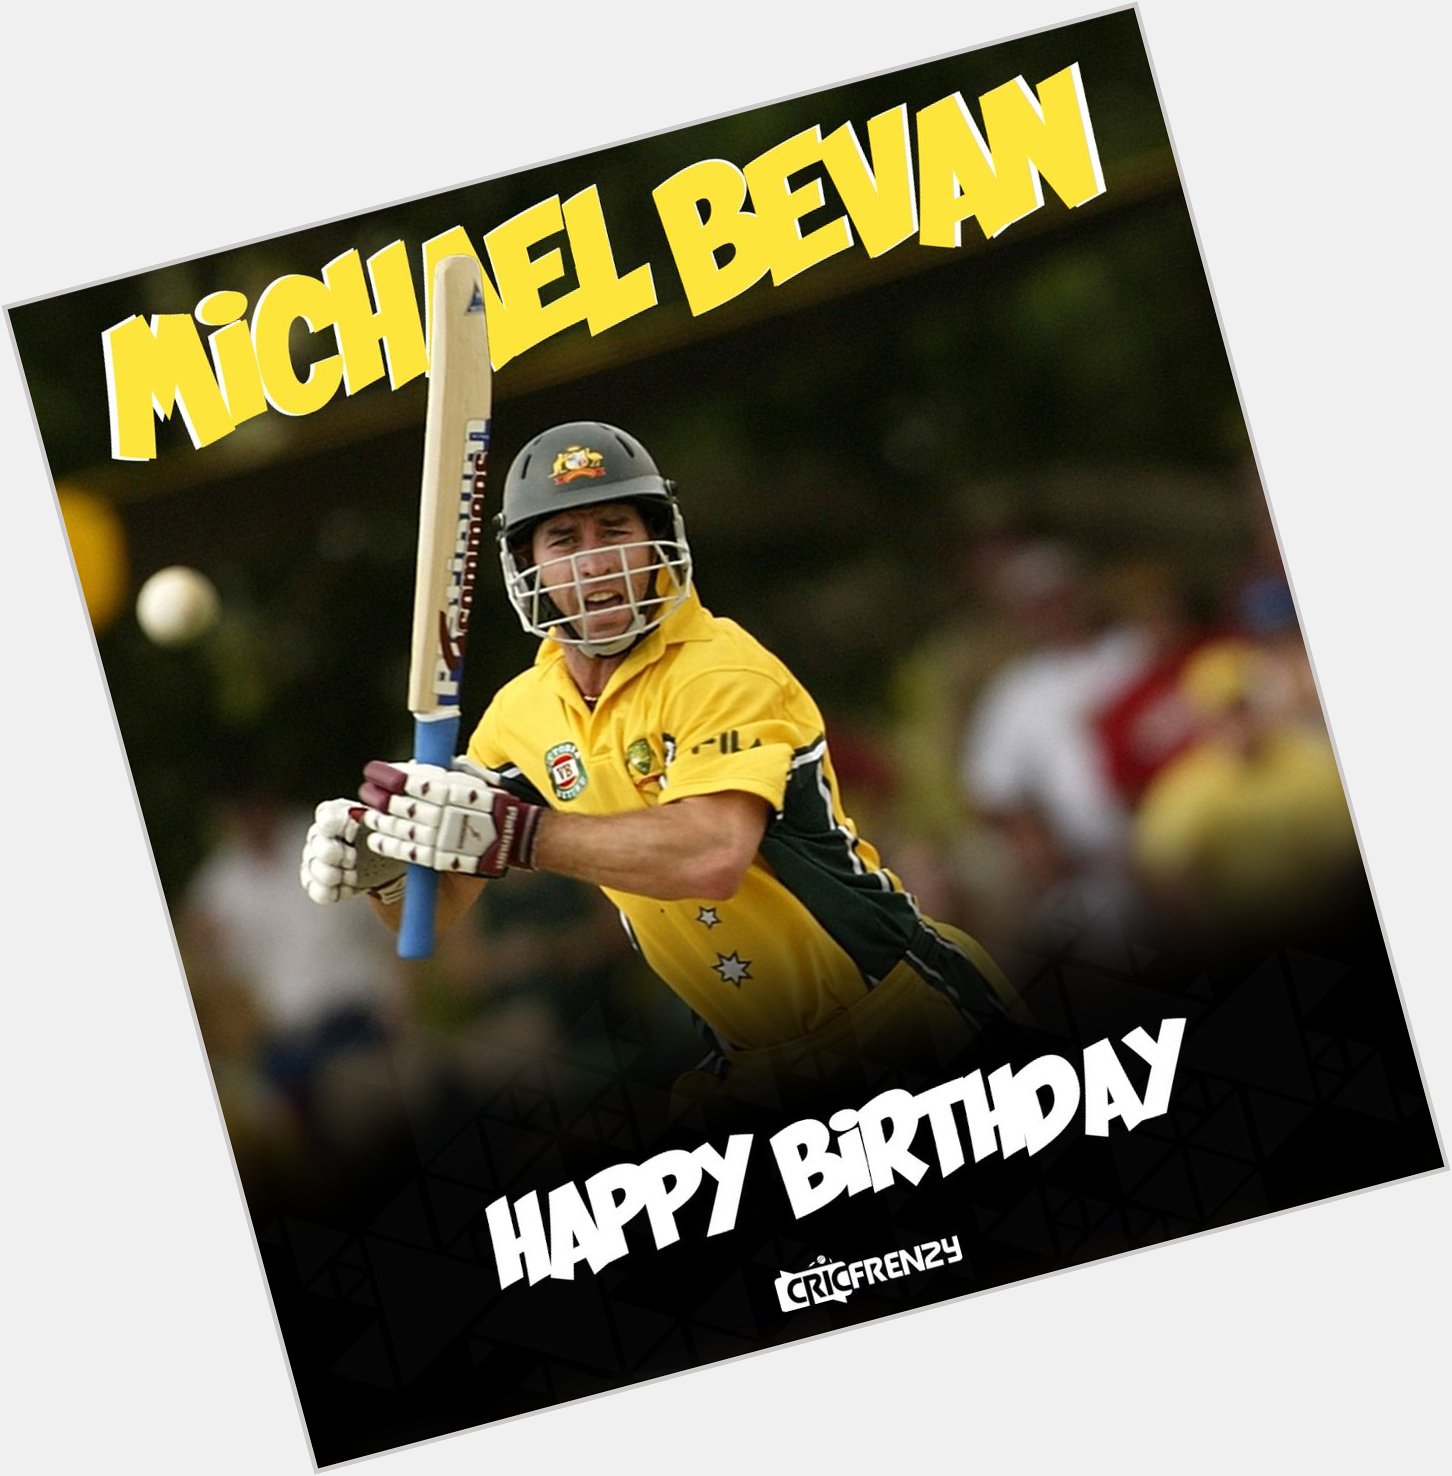 1999 and 2003 Cricket World Cup winner
Happy birthday Michael Bevan    